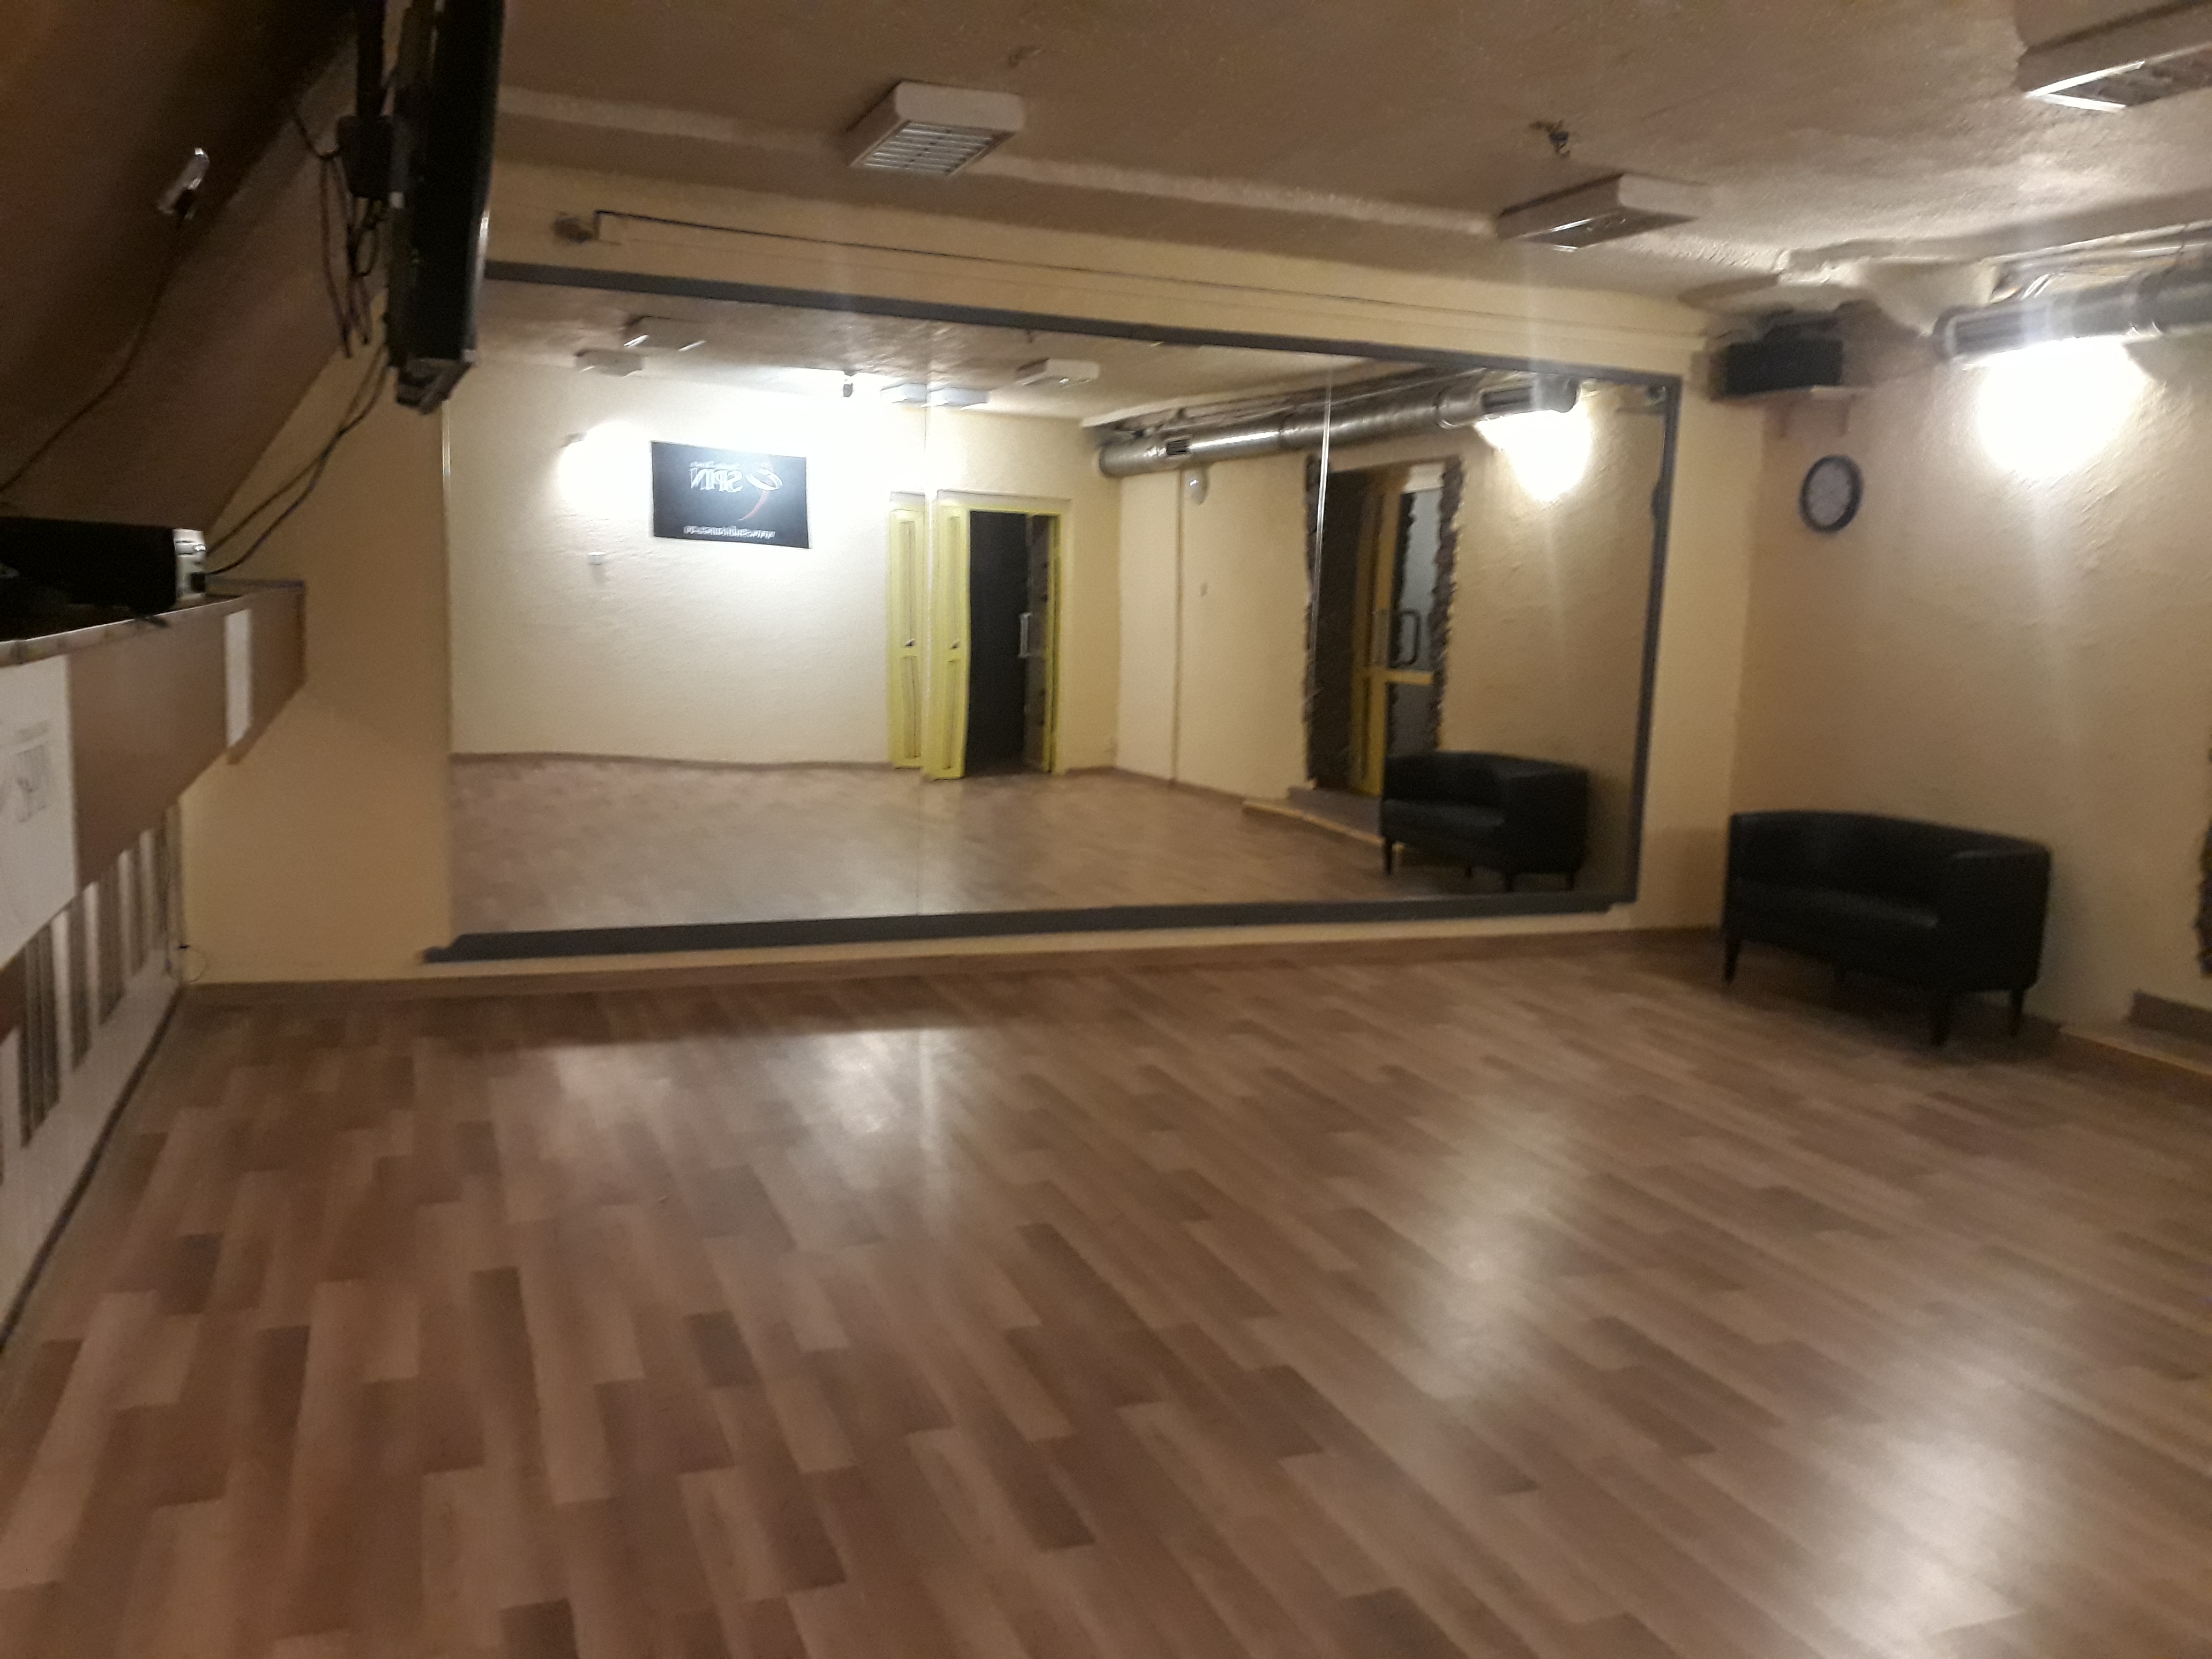 Studio Tańca Spin Mała Sala Taneczna -lustro